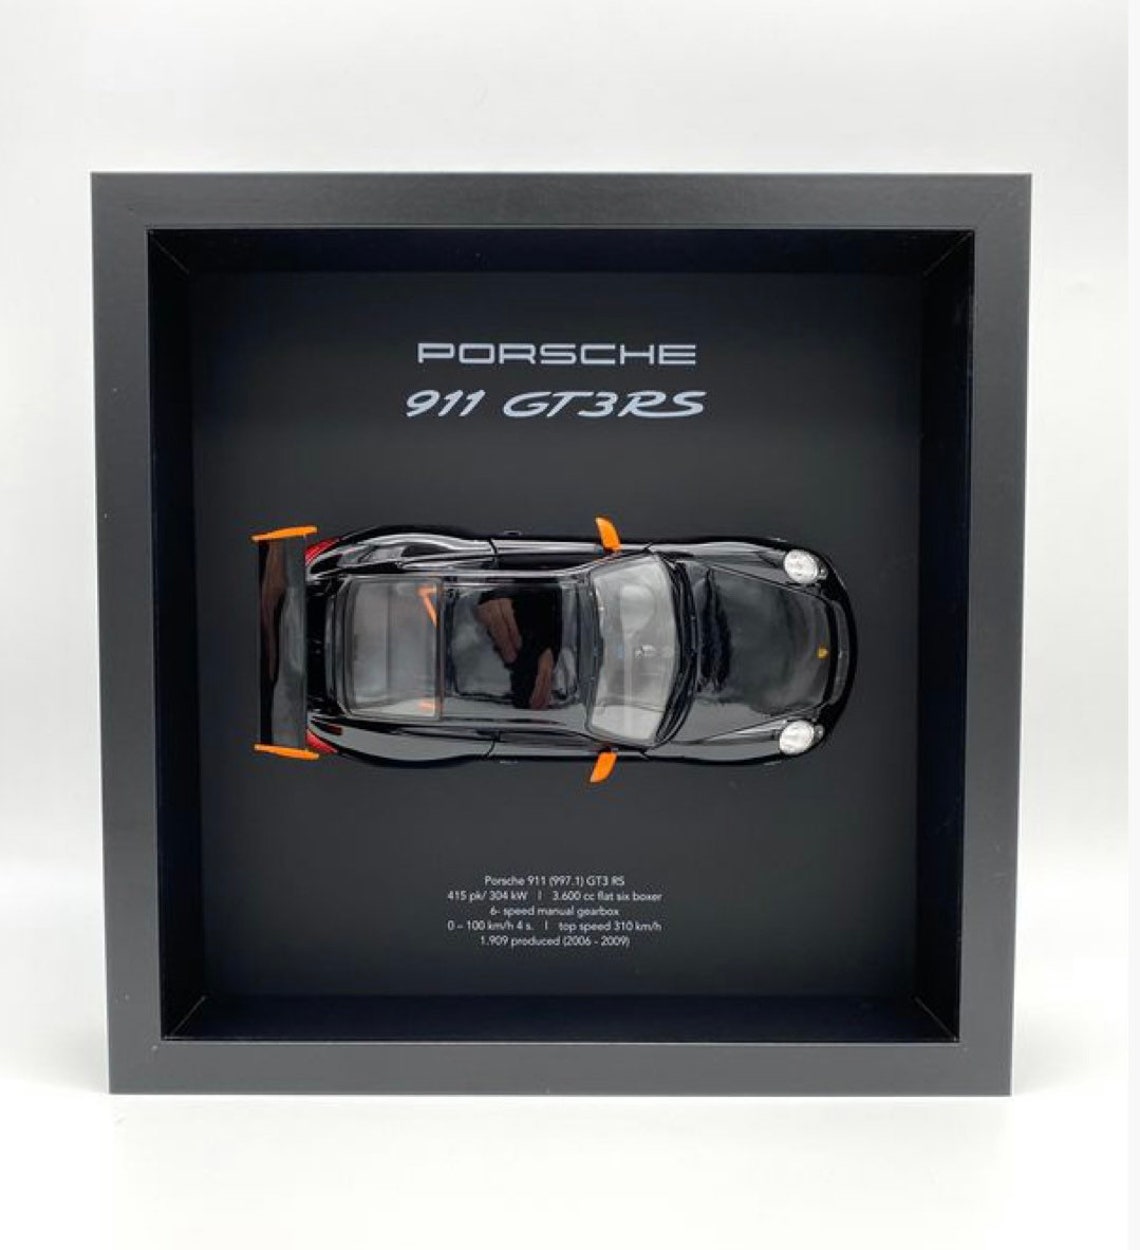 Porsche 911 997 GT3 RS 3D Frame - Etsy